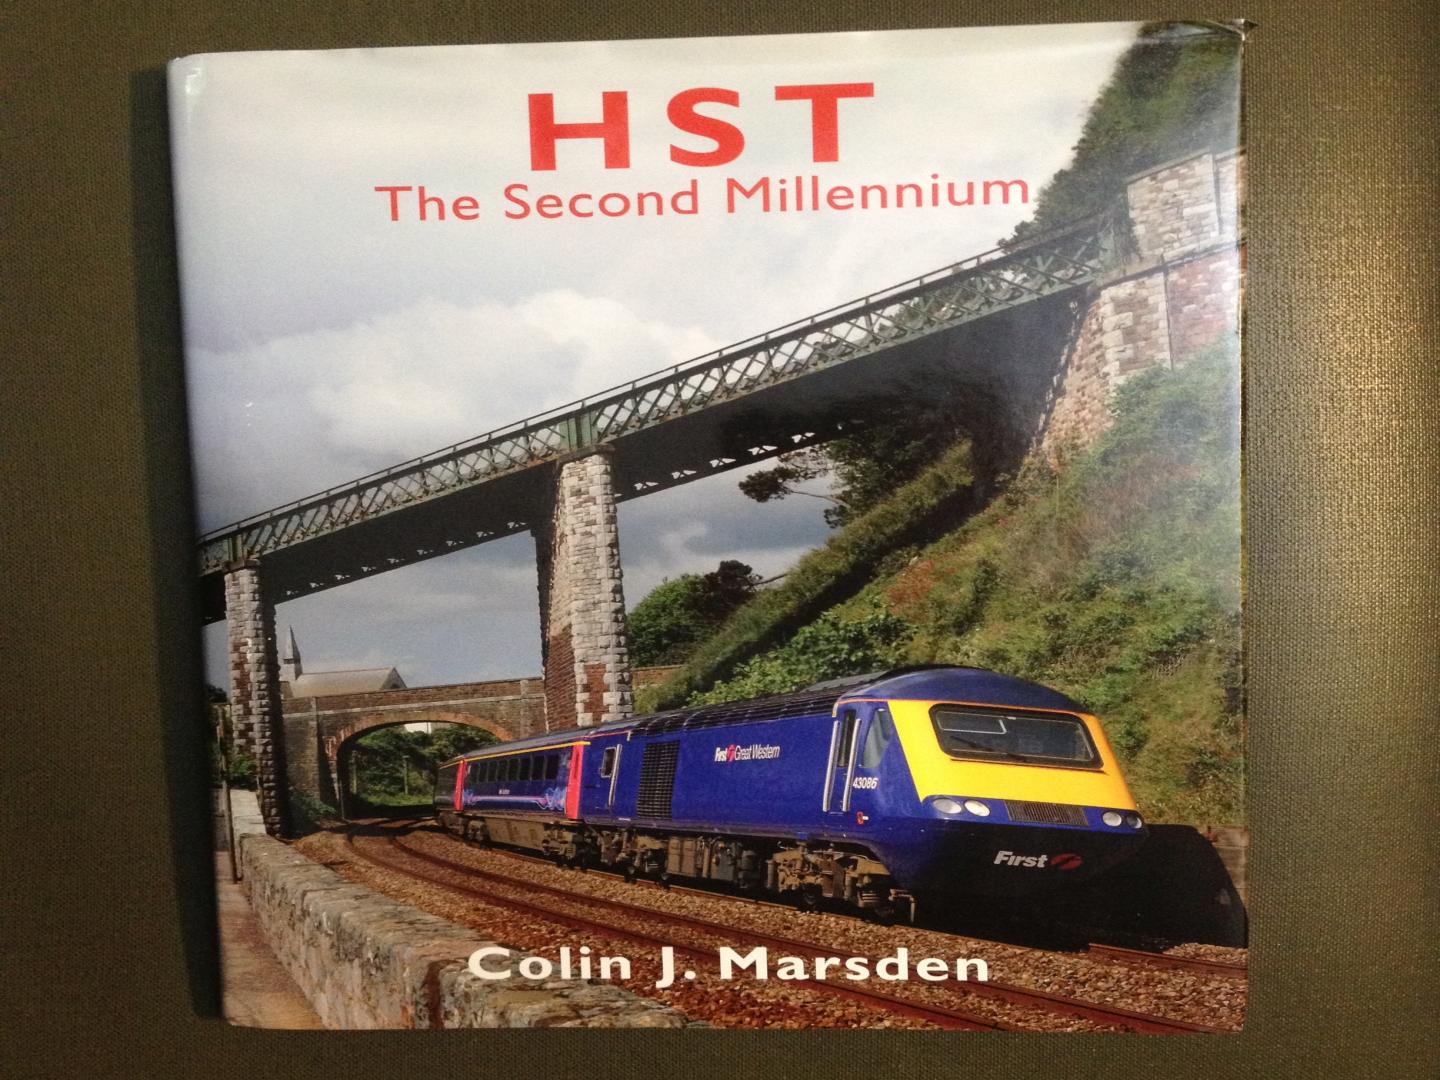 Marsden, Colin - HST - The Second Millennium